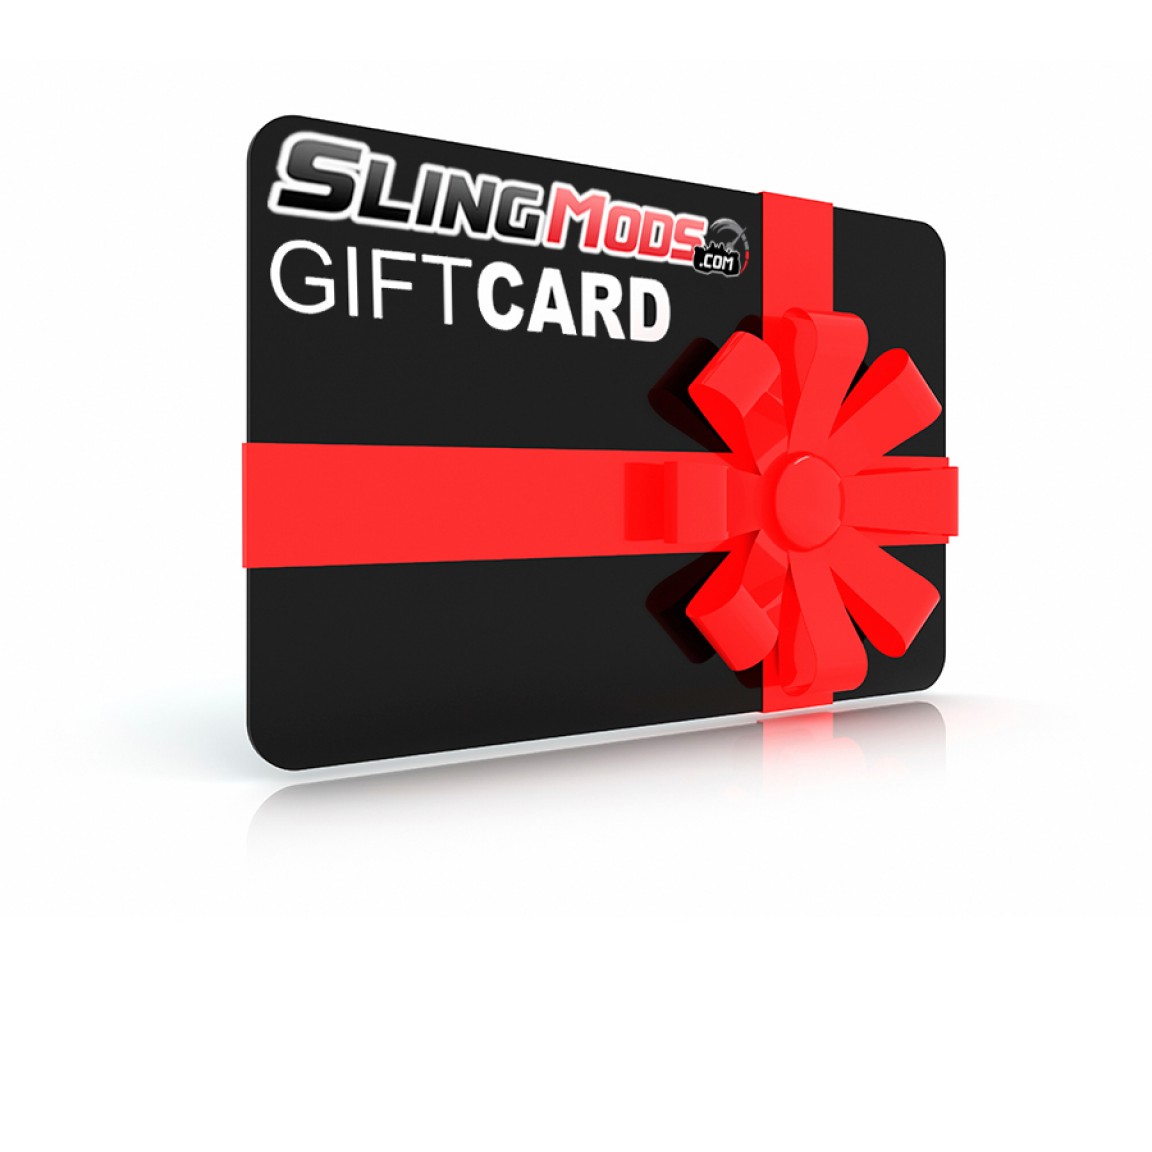 SlingMods Gift Certificate